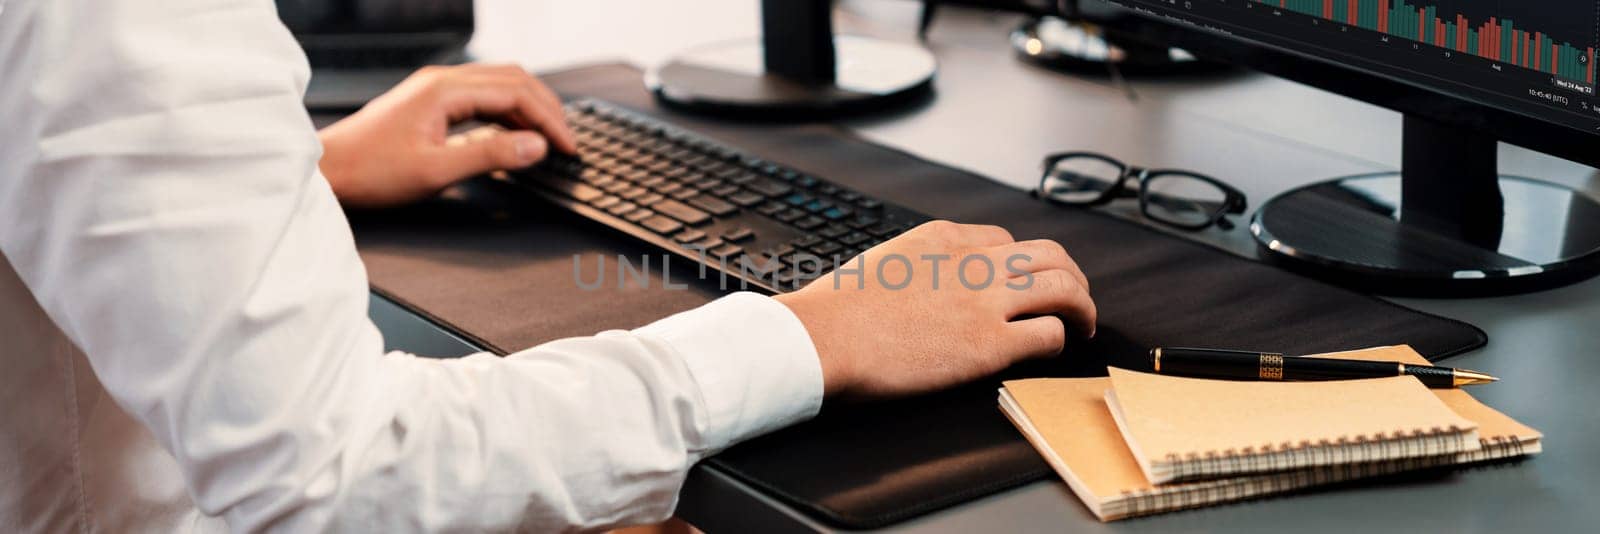 Office worker sitting on workspace desk typing on keyboard. Trailblazing by biancoblue